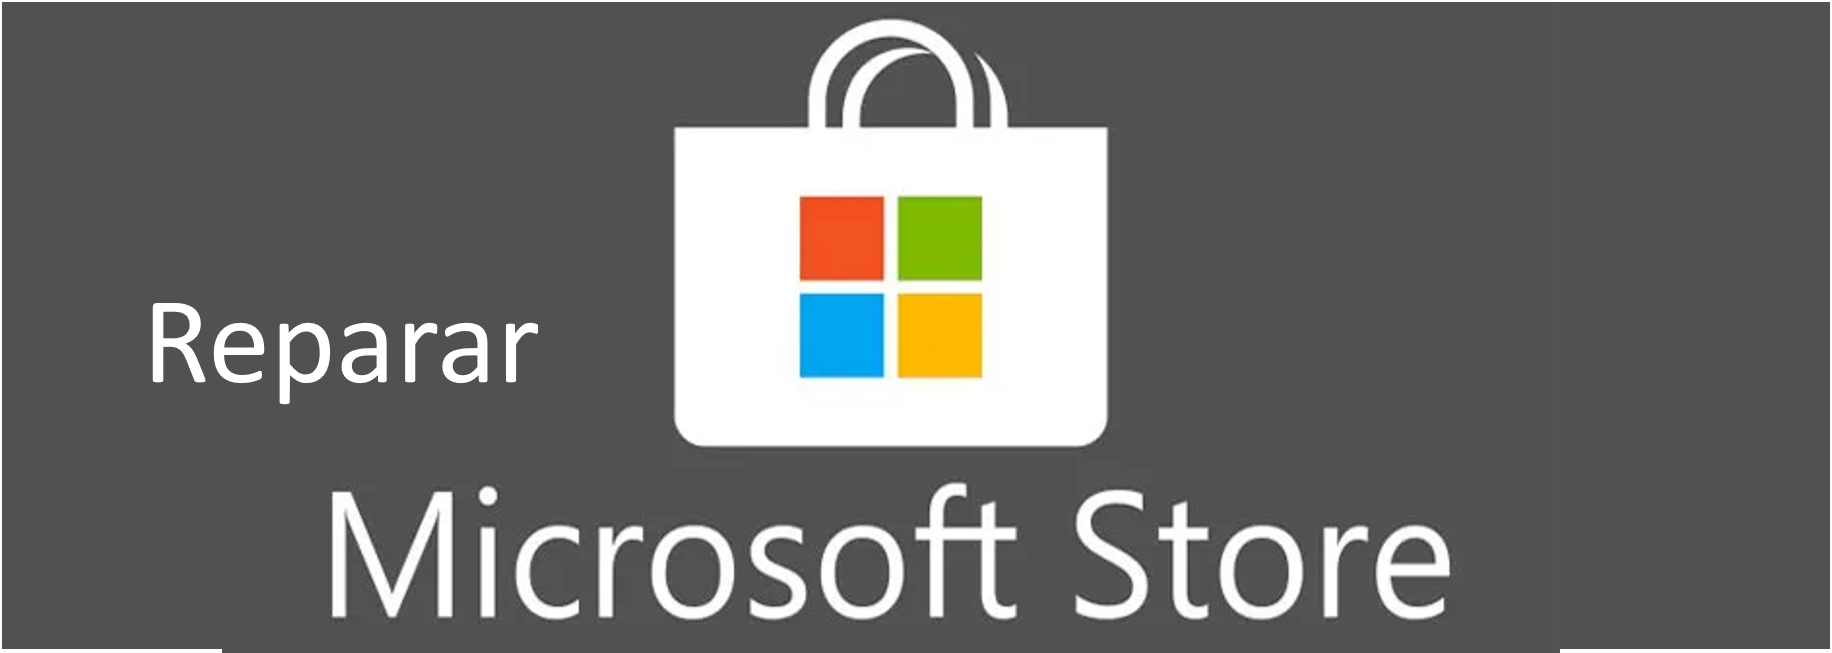 En este momento estás viendo Agregar o Reparar Tienda Microsoft o Microsoft Store en Windows 10.